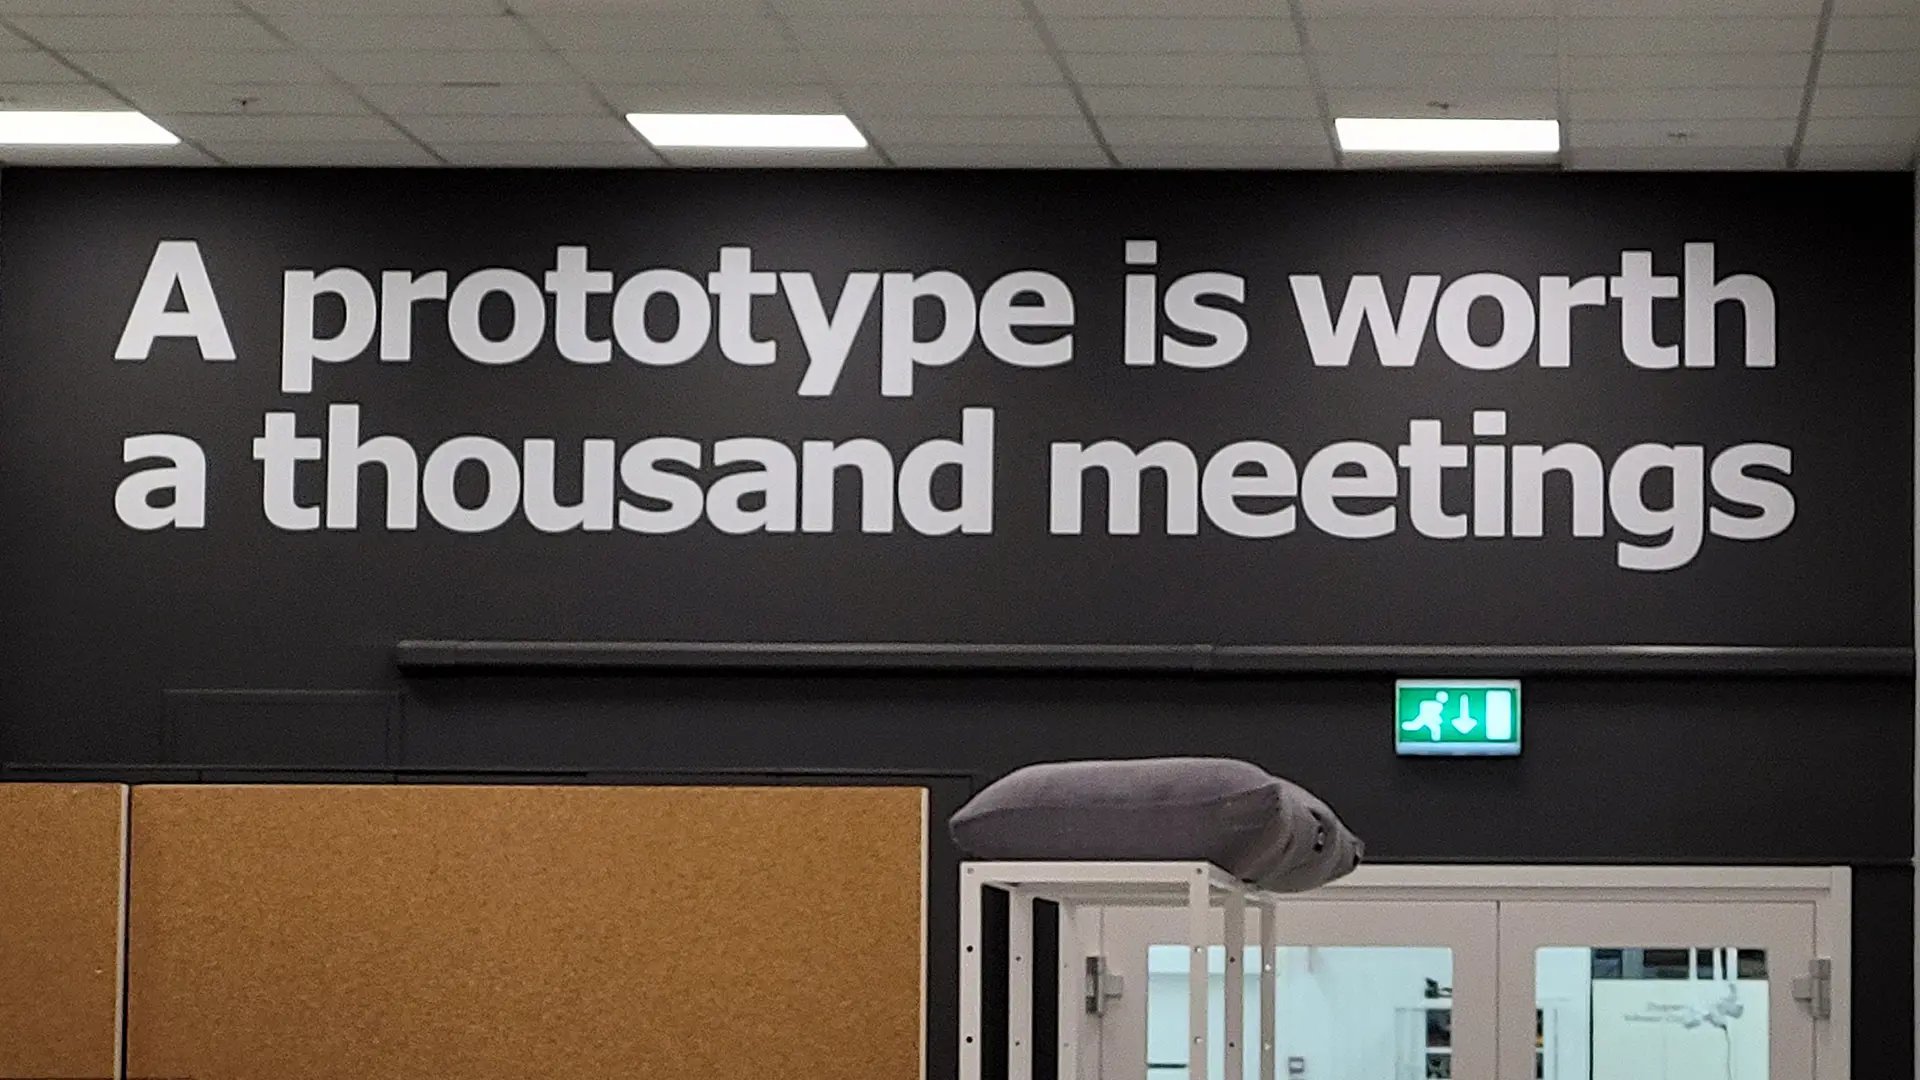 En skylt med vit text på svart botten som säger A prototype is worth a thousand meetings